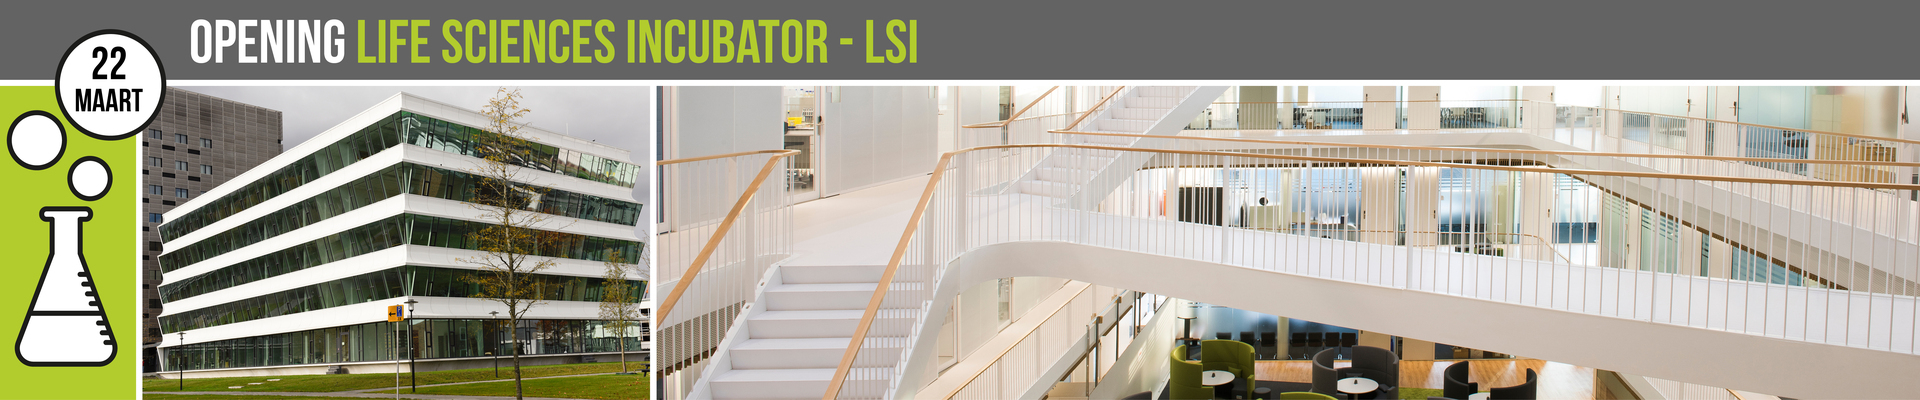 Opening Life Sciences Incubator - LSI